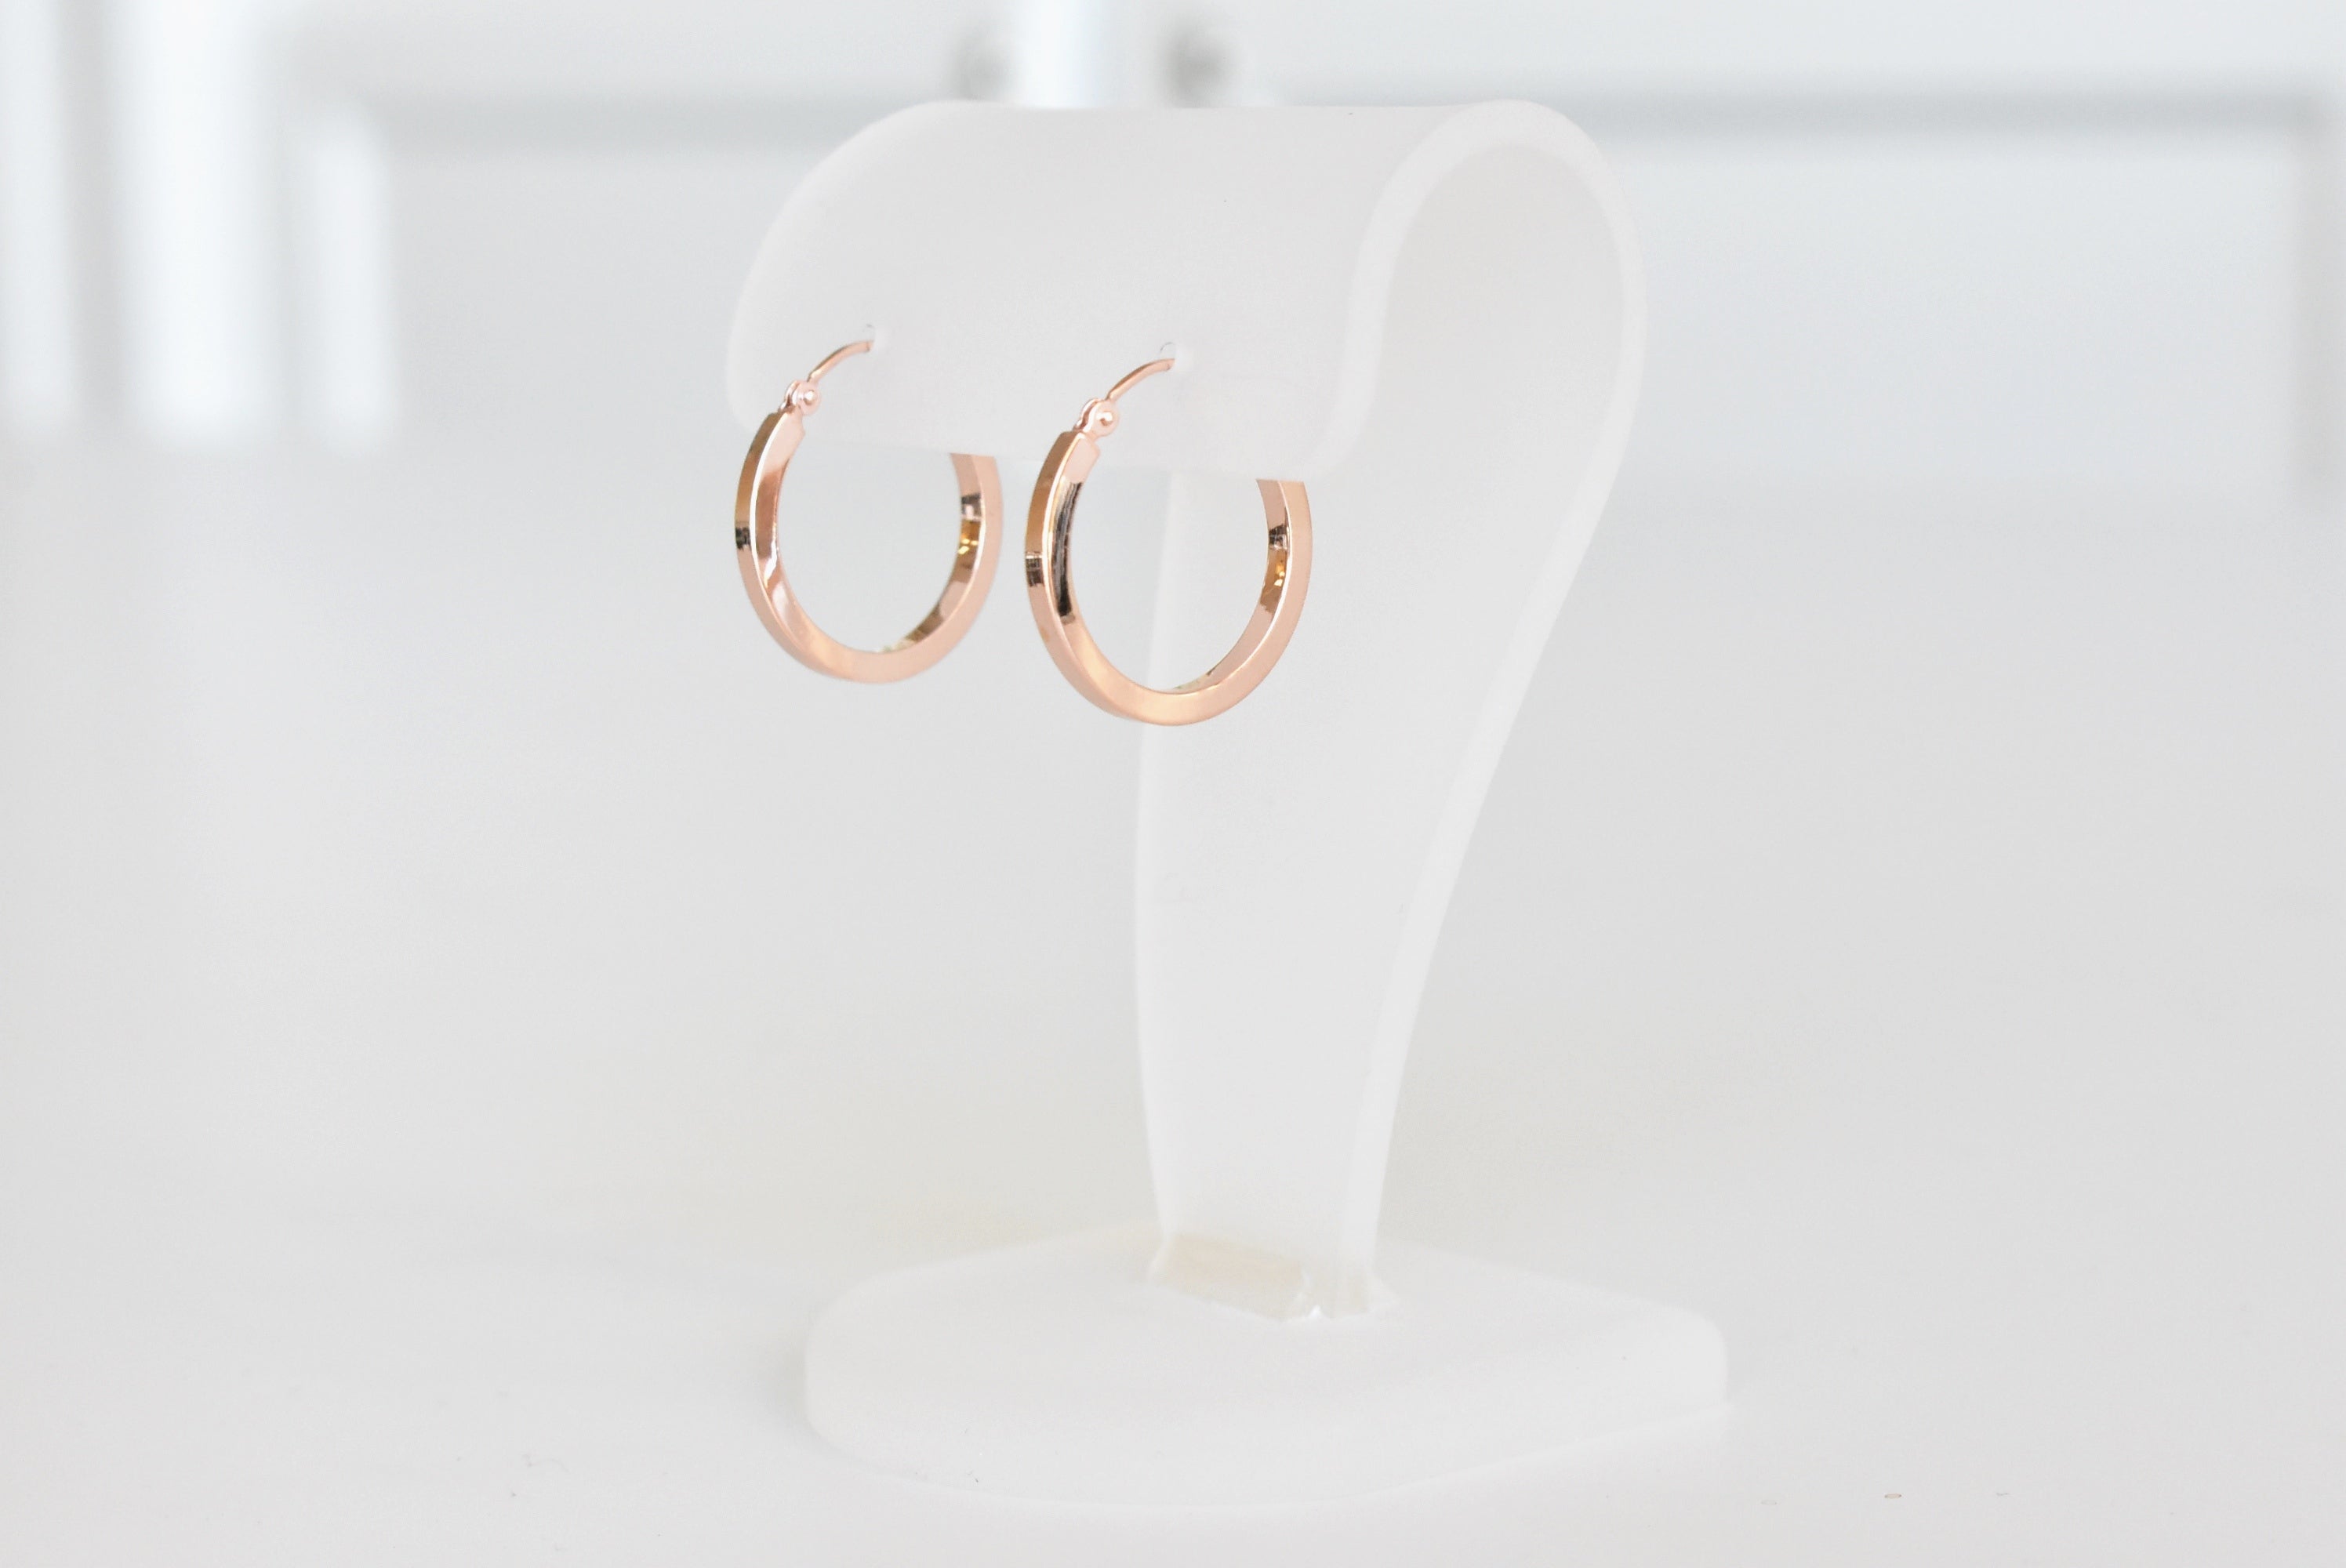 14K Rose Gold Square Tube Round Hoop Earrings 20mmx2mm